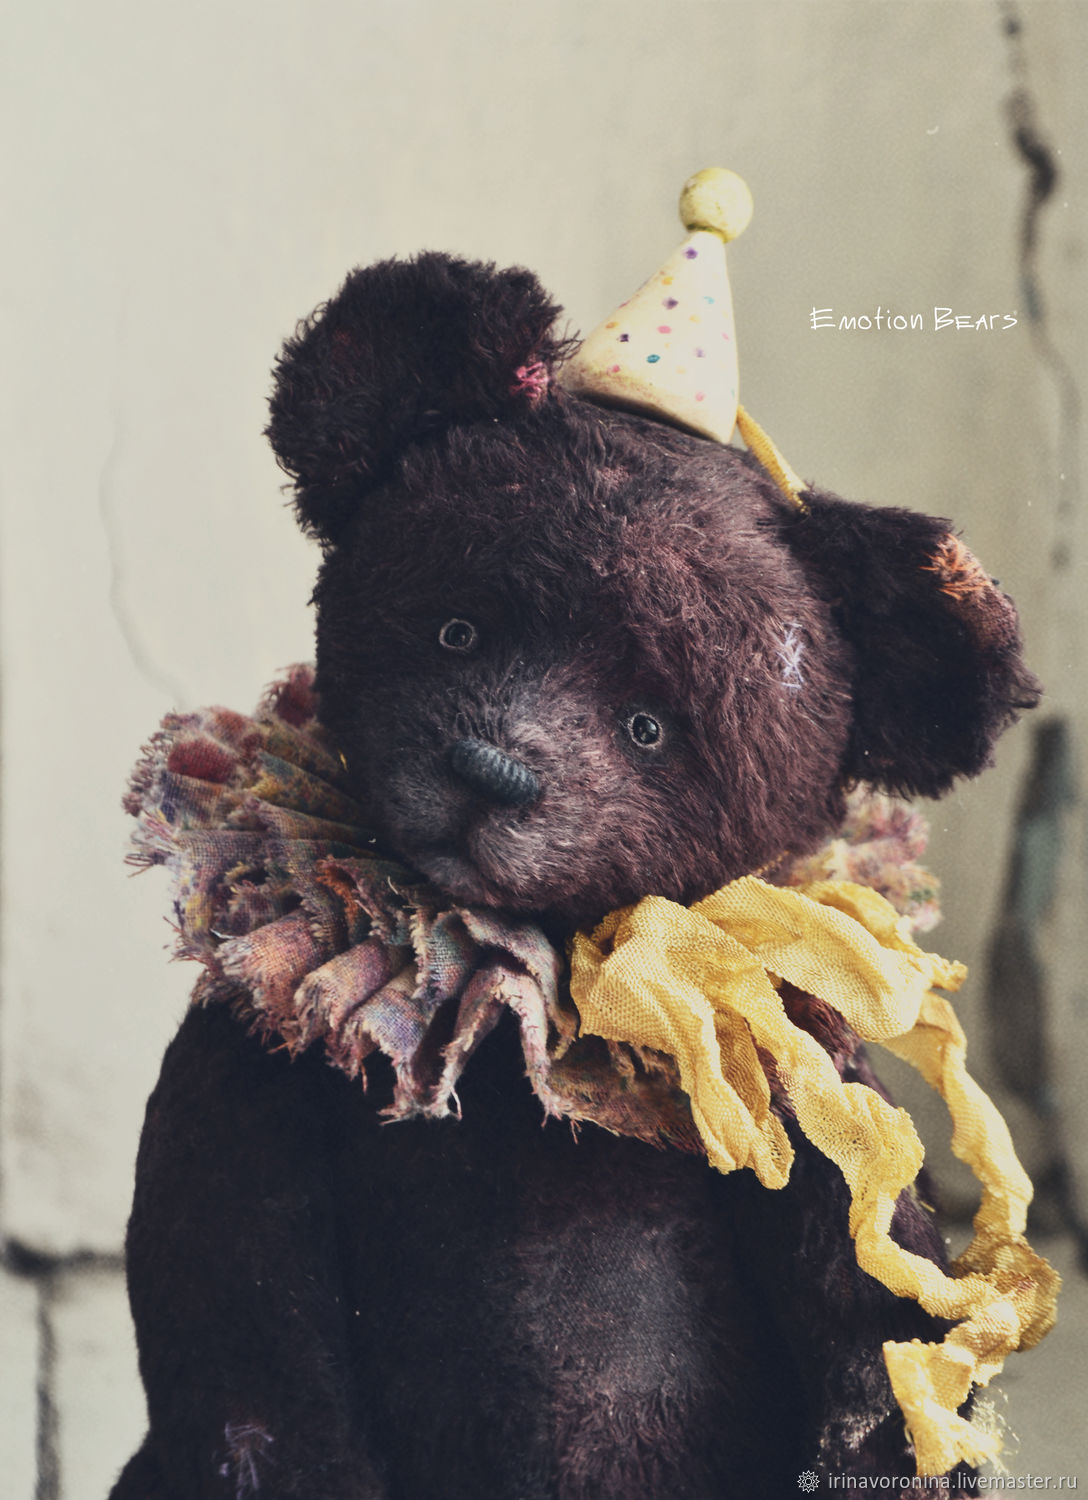 collectible stuffed bears